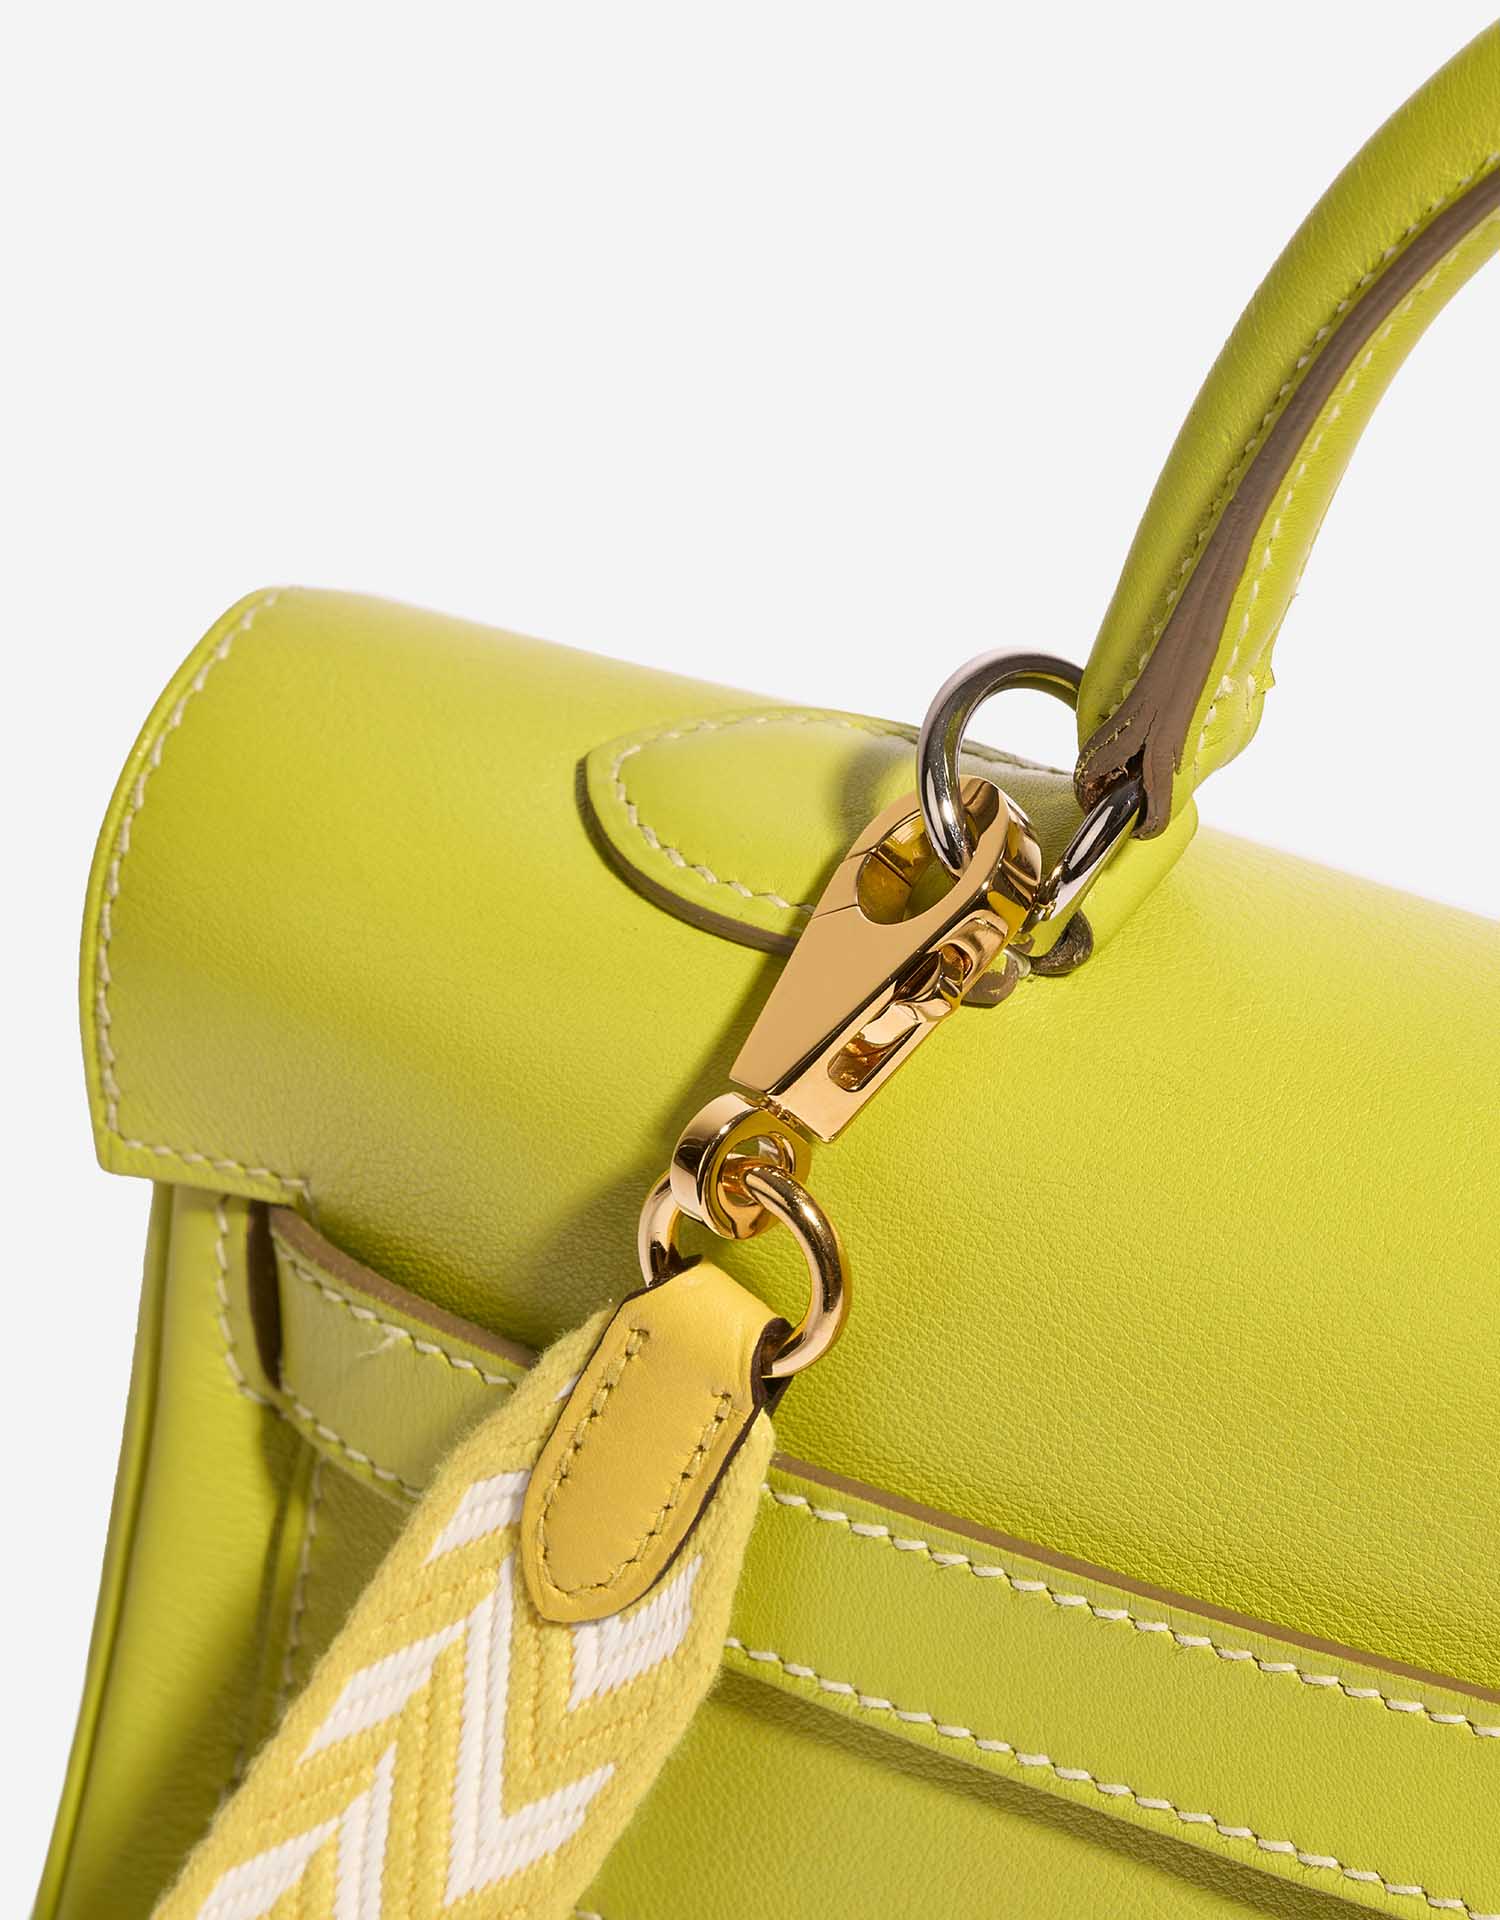 Pre-owned Hermès bag Strap 114 Canvas / Swift Jaune de Naples / Blanc Yellow Detail | Sell your designer bag on Saclab.com